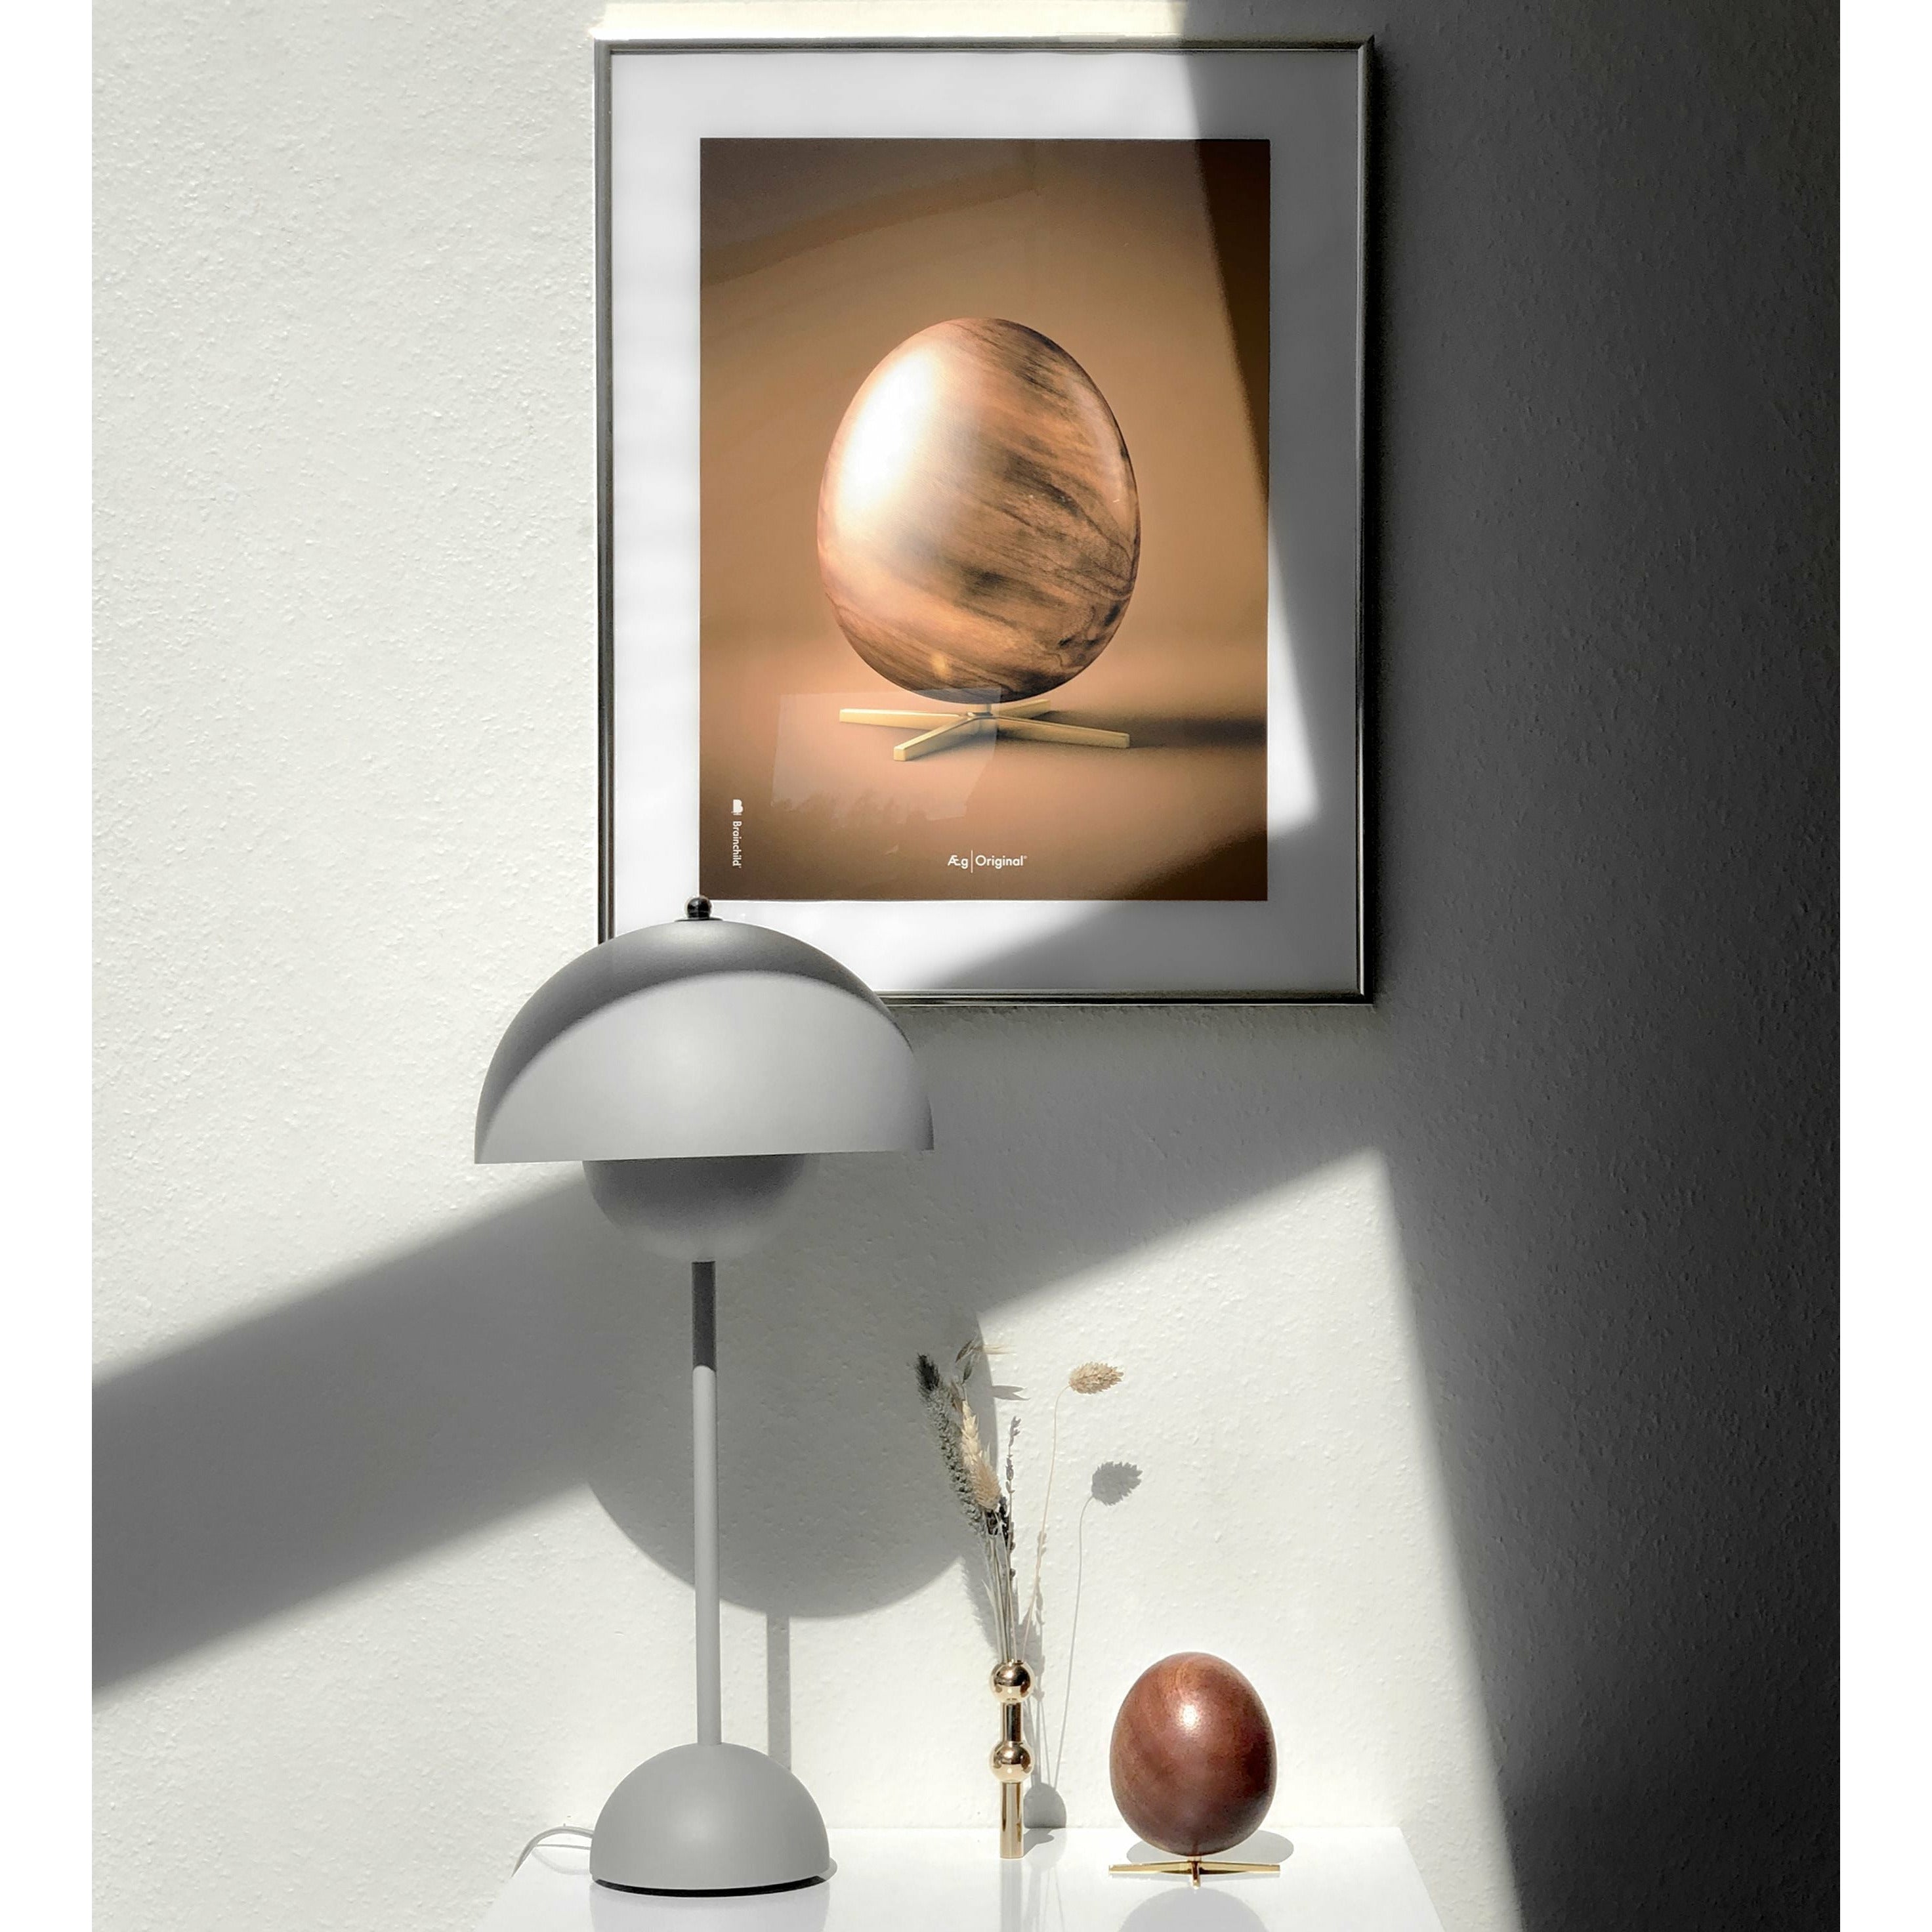 Brainchild The Egg Wooden Figure Oak, Silver Colored Foot